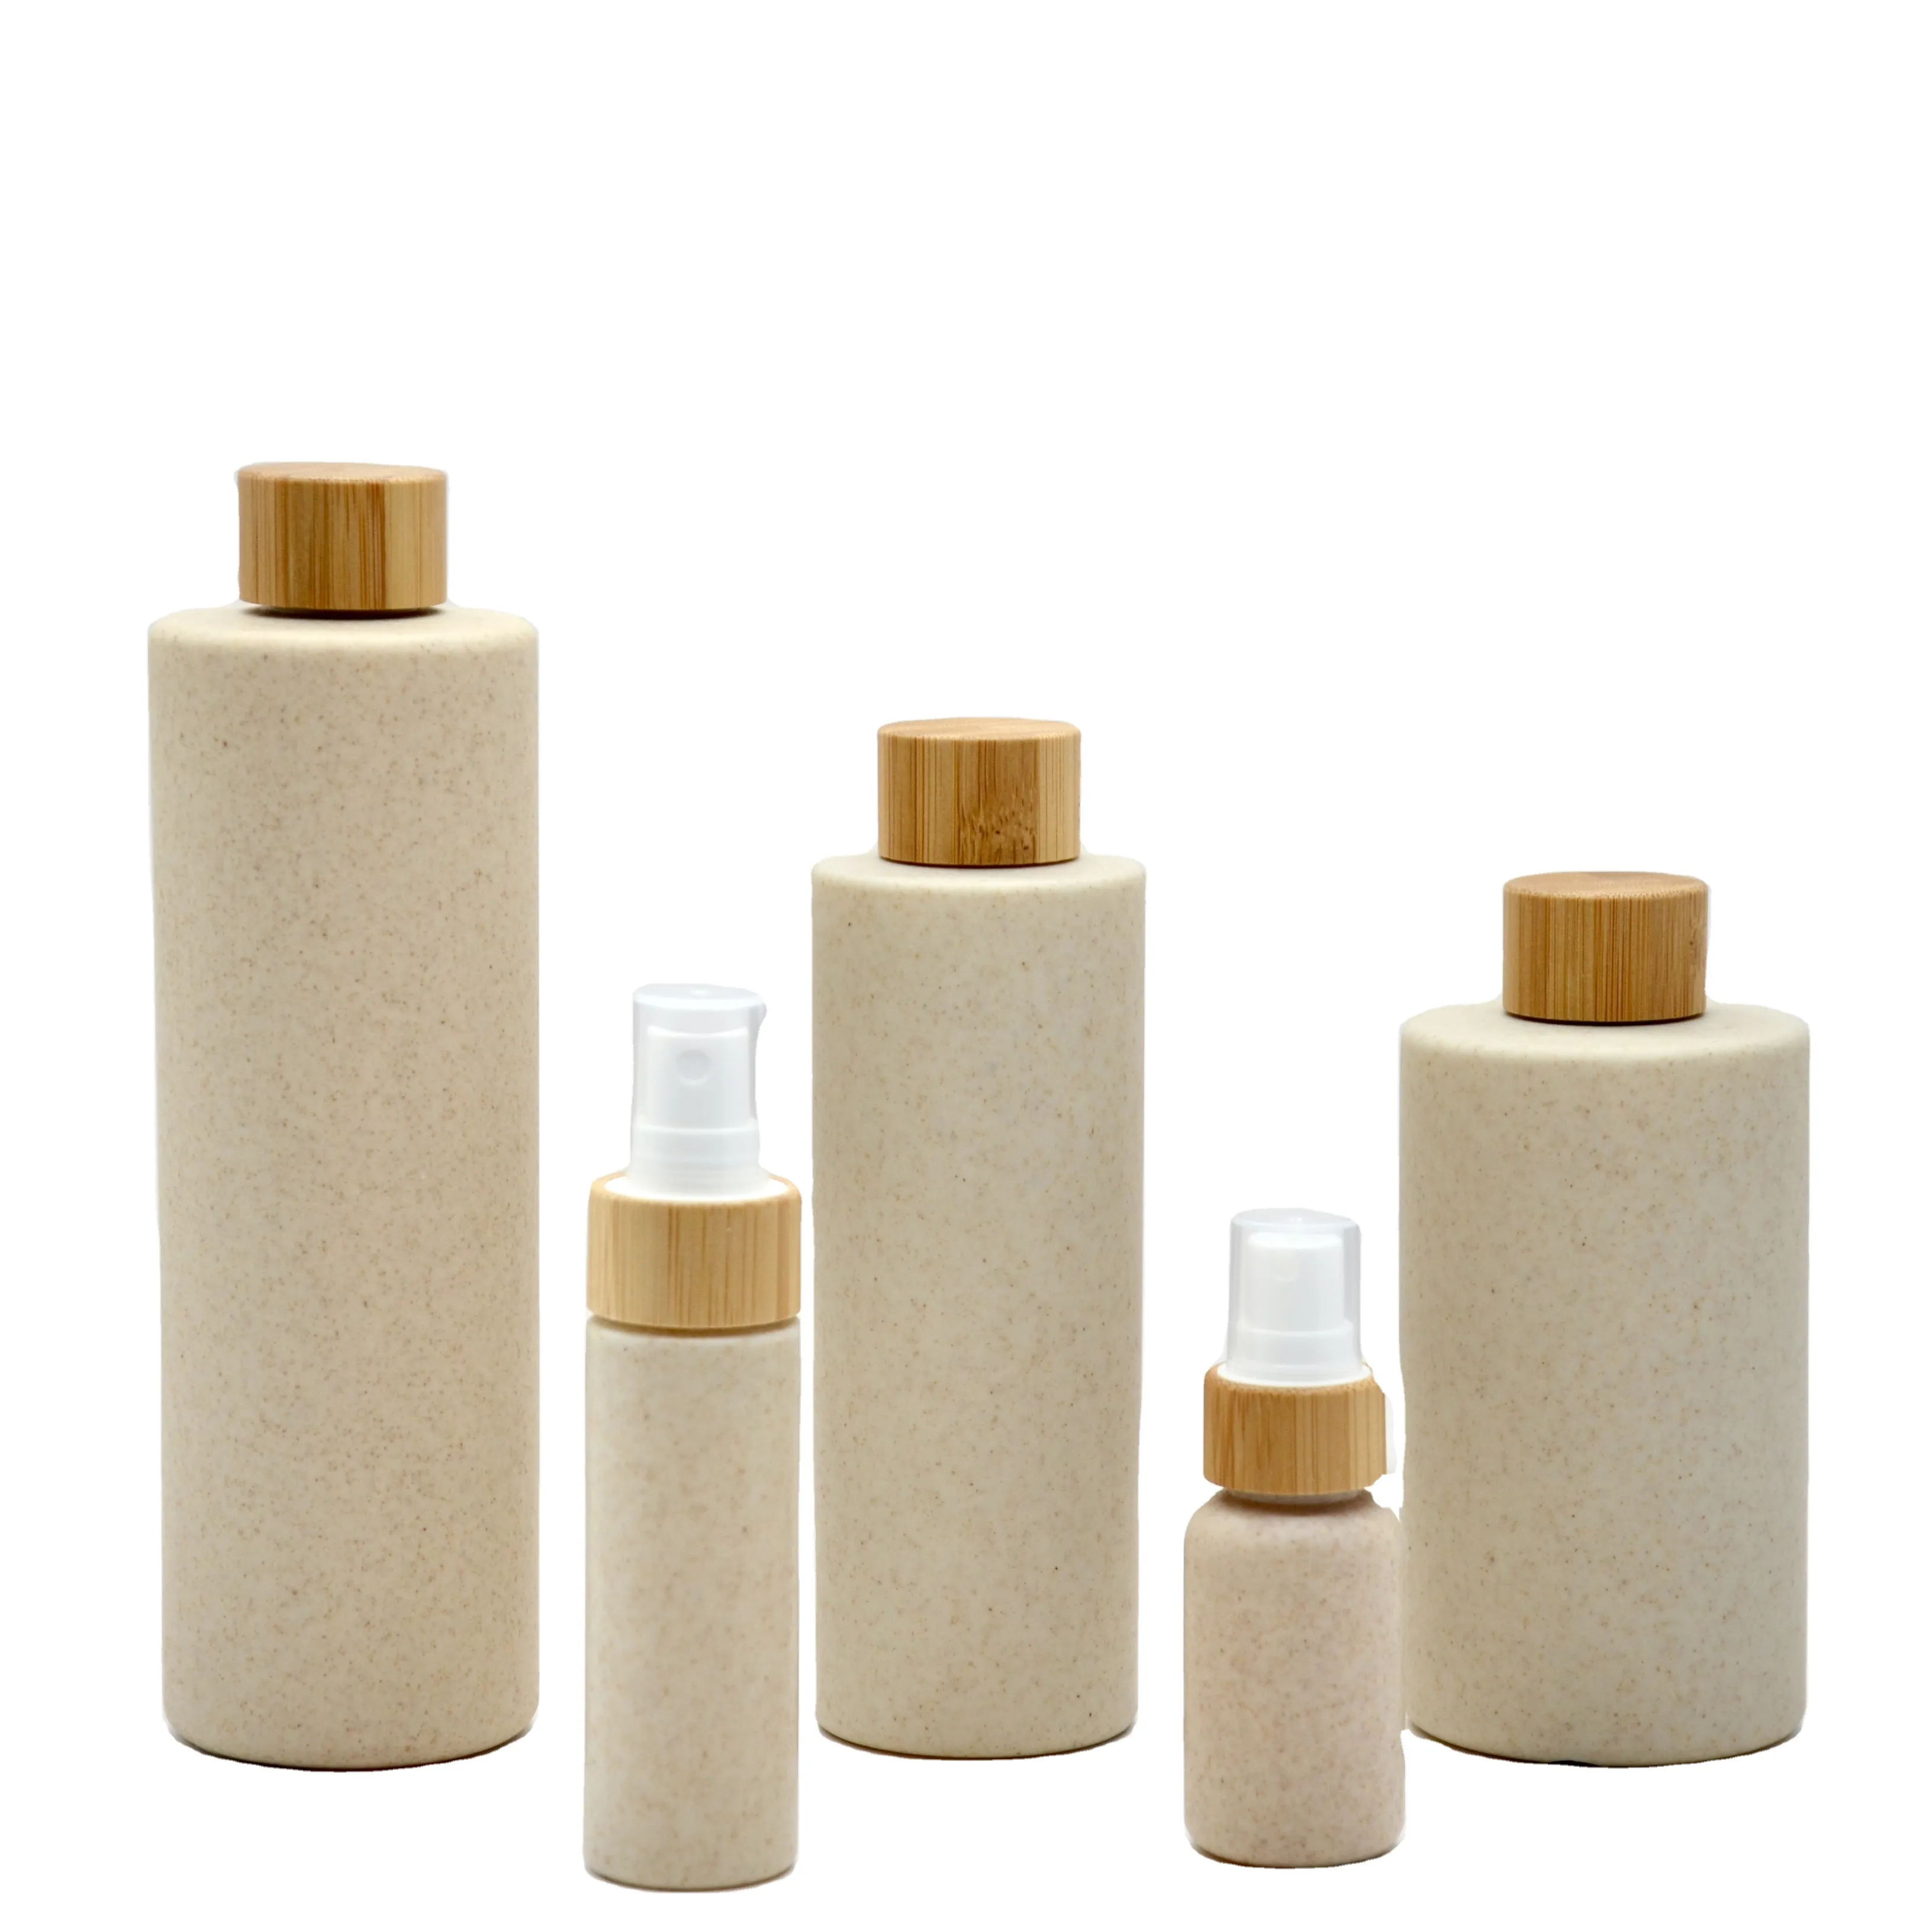 Botol semprot sampo plastik mudah terurai ramah lingkungan, botol kosmetik jerami gandum mudah terurai